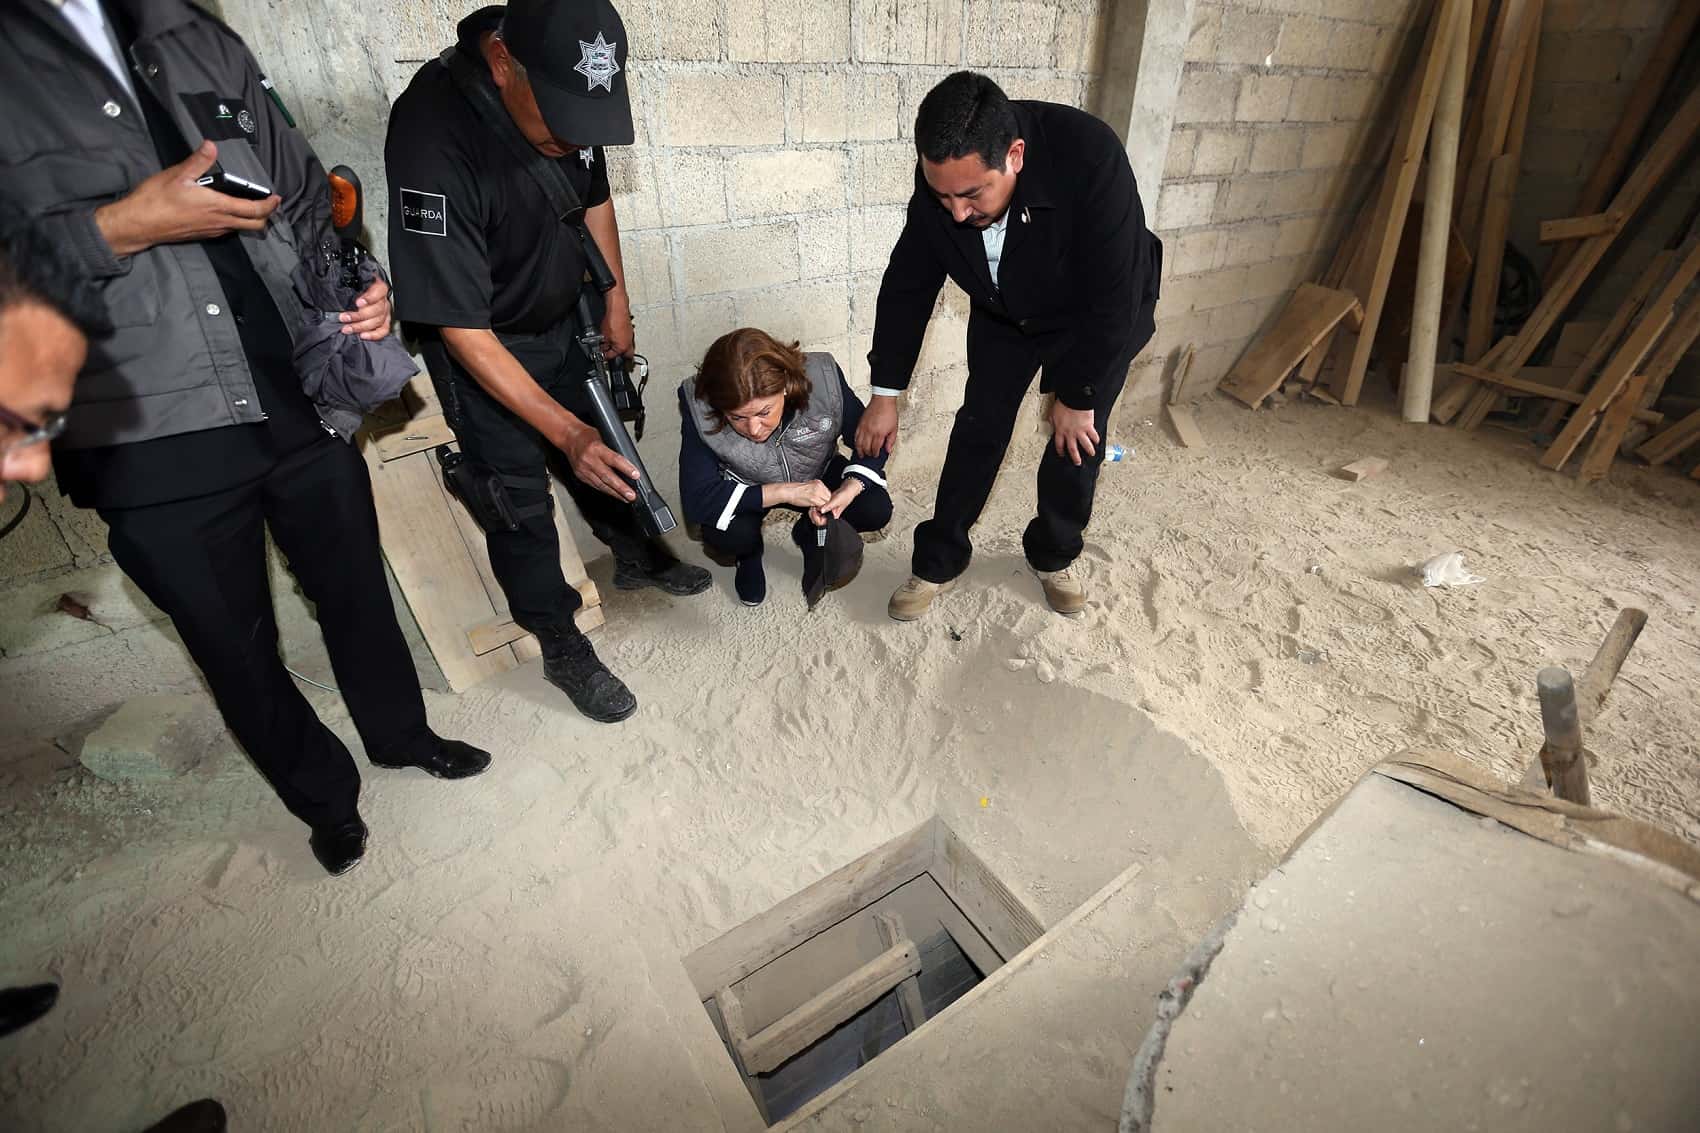 El Chapo Guzmán's escape tunnel